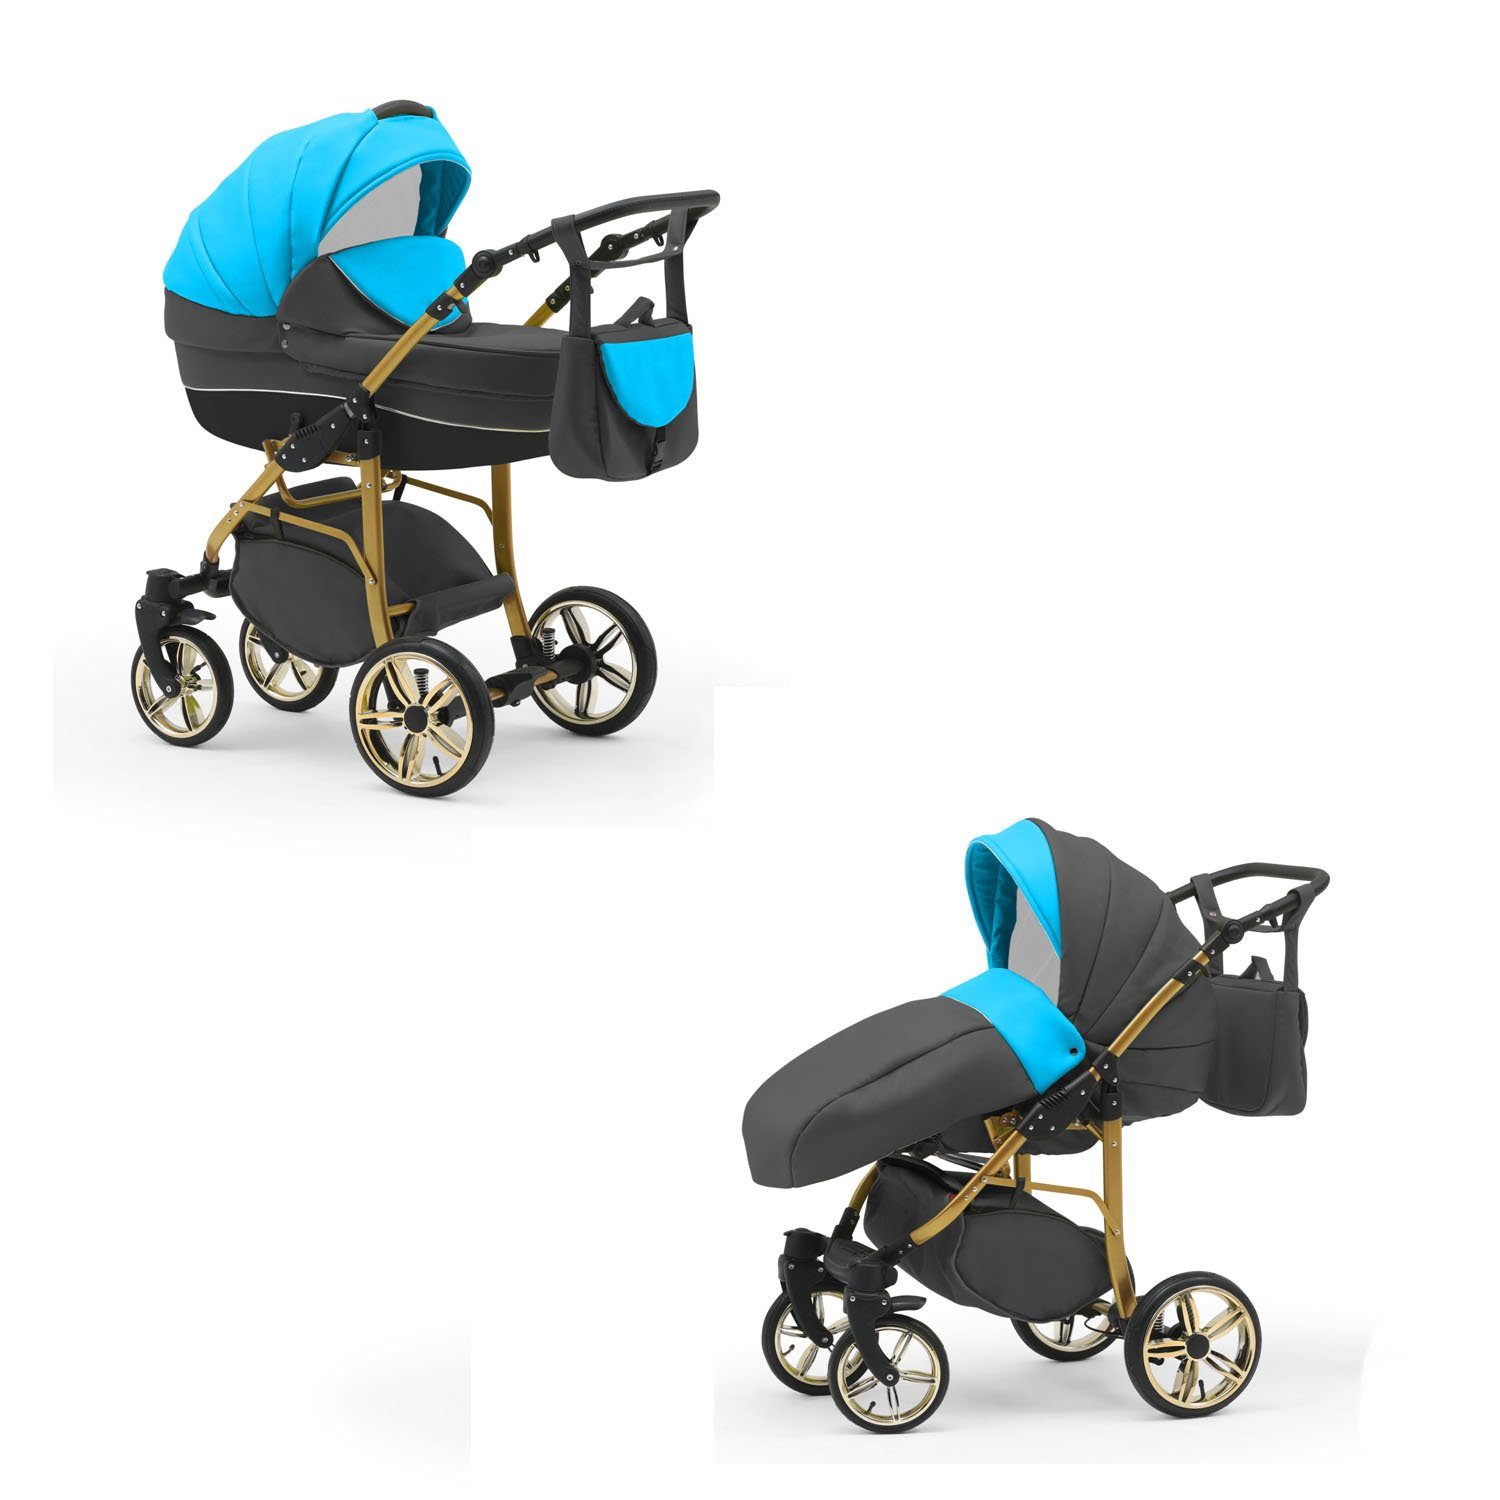 babies-on-wheels Kinderwagen-Set Türkis-Grau-Schwarz 46 1 Gold - 2 13 in - in Kombi-Kinderwagen Teile Cosmo Farben